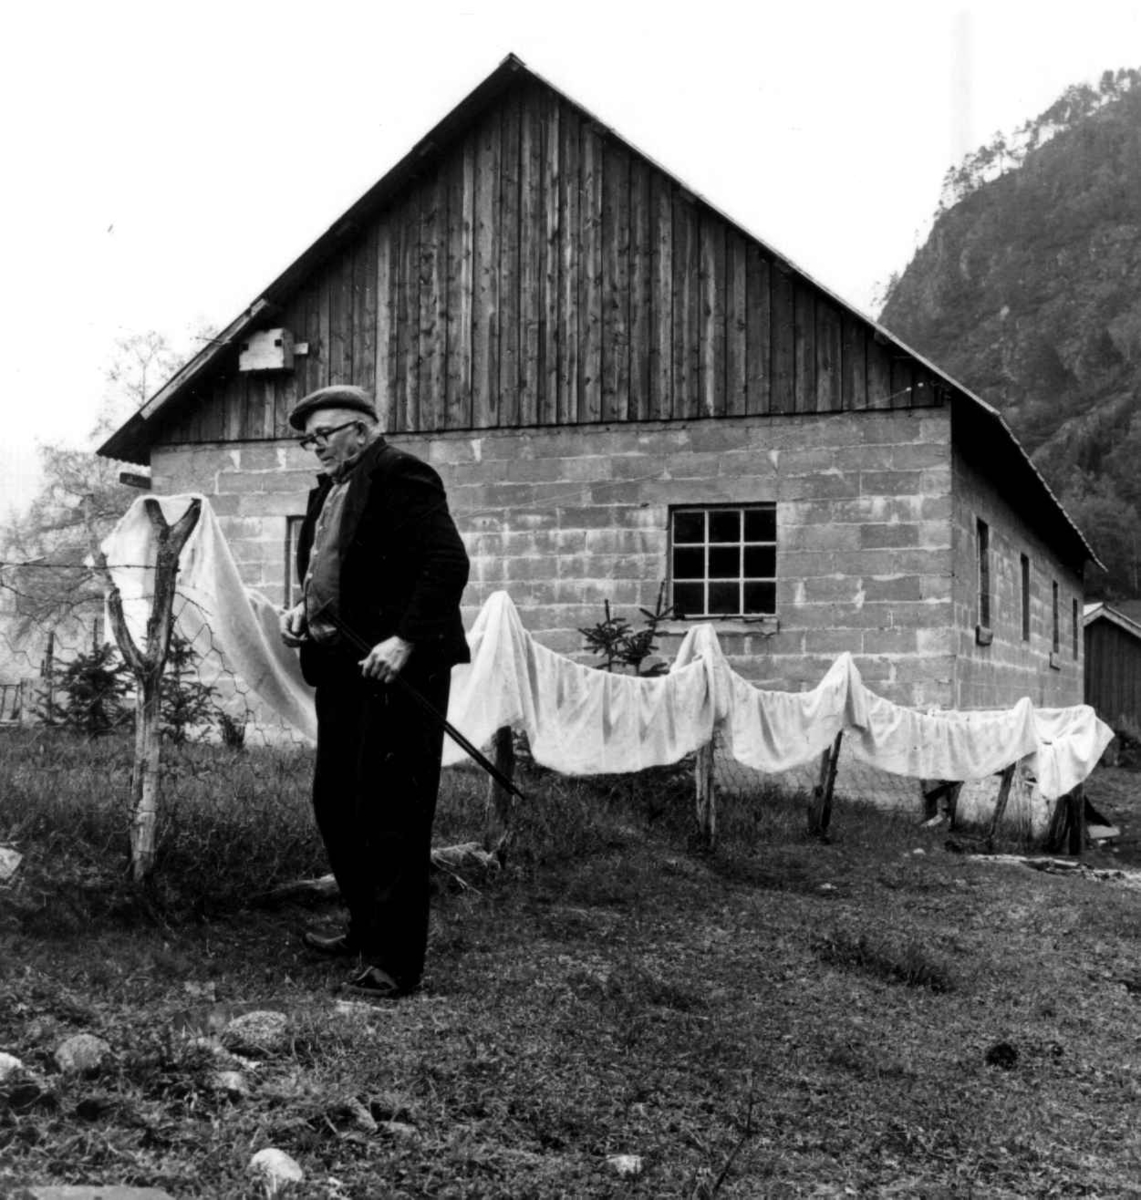 Stamping av vadmel. Ingemund Kvæstad har hengt ferdigstampet vadmelstøy til tørk og står med vevteinen i hånden, Låven i bakgrunnen. Kvæstad, Suldal, Rogaland 1970.